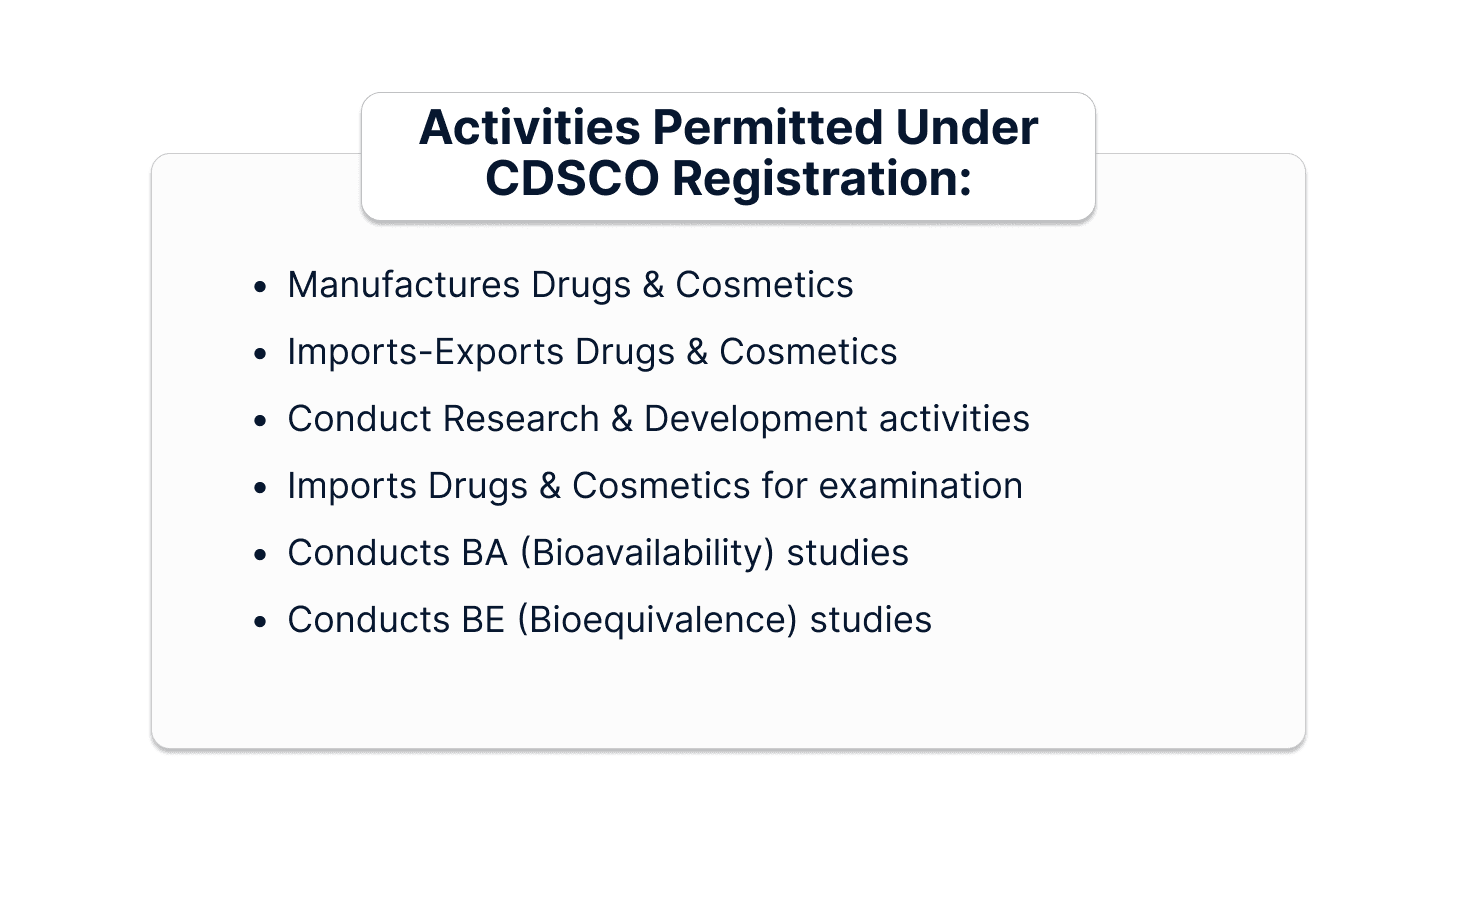 Activities permitted under CDSCO Registration